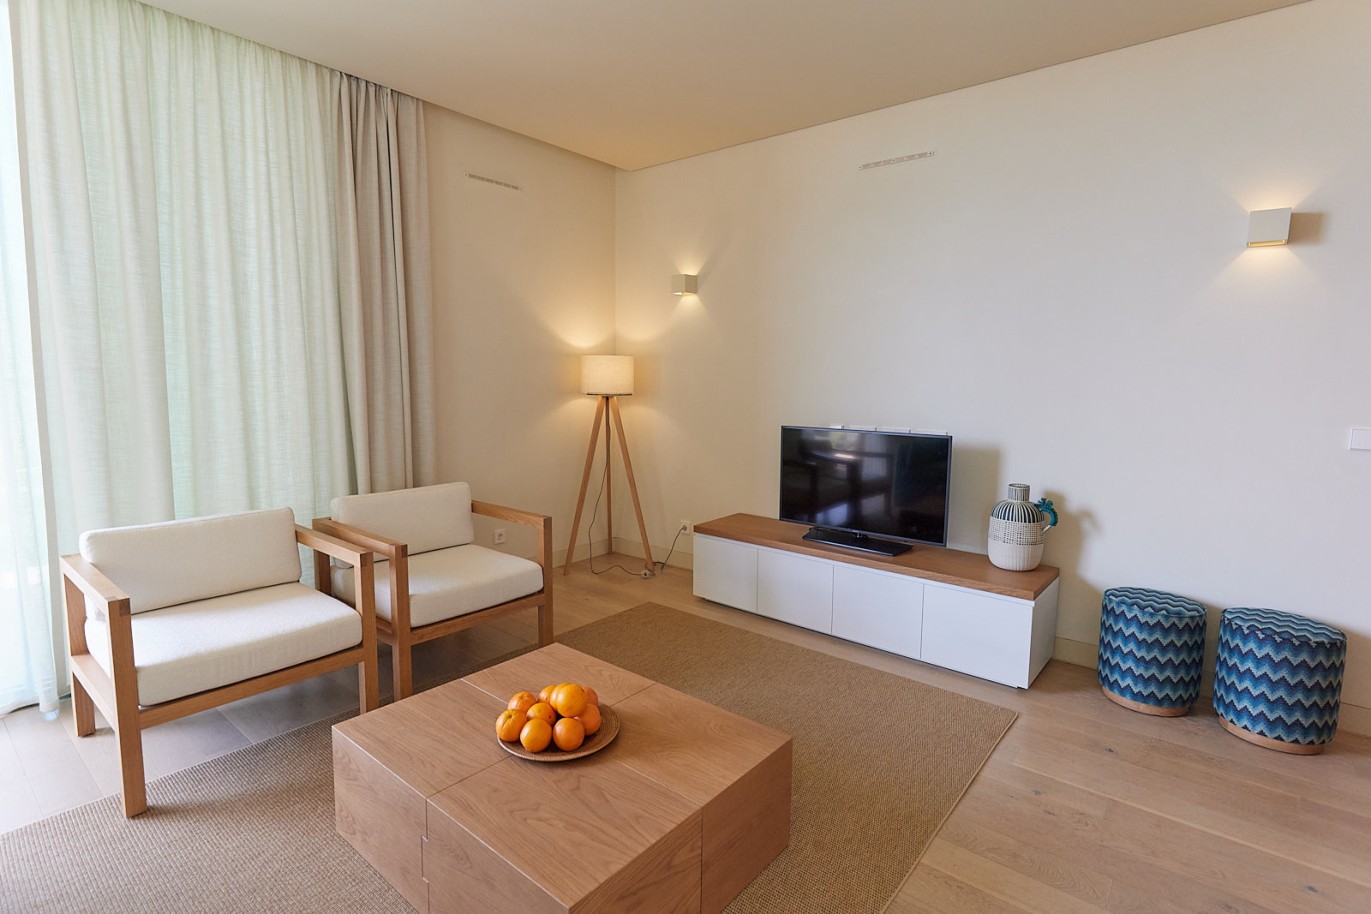 2 bedroom apartment in resort, for sale in Porches, Algarve_229175